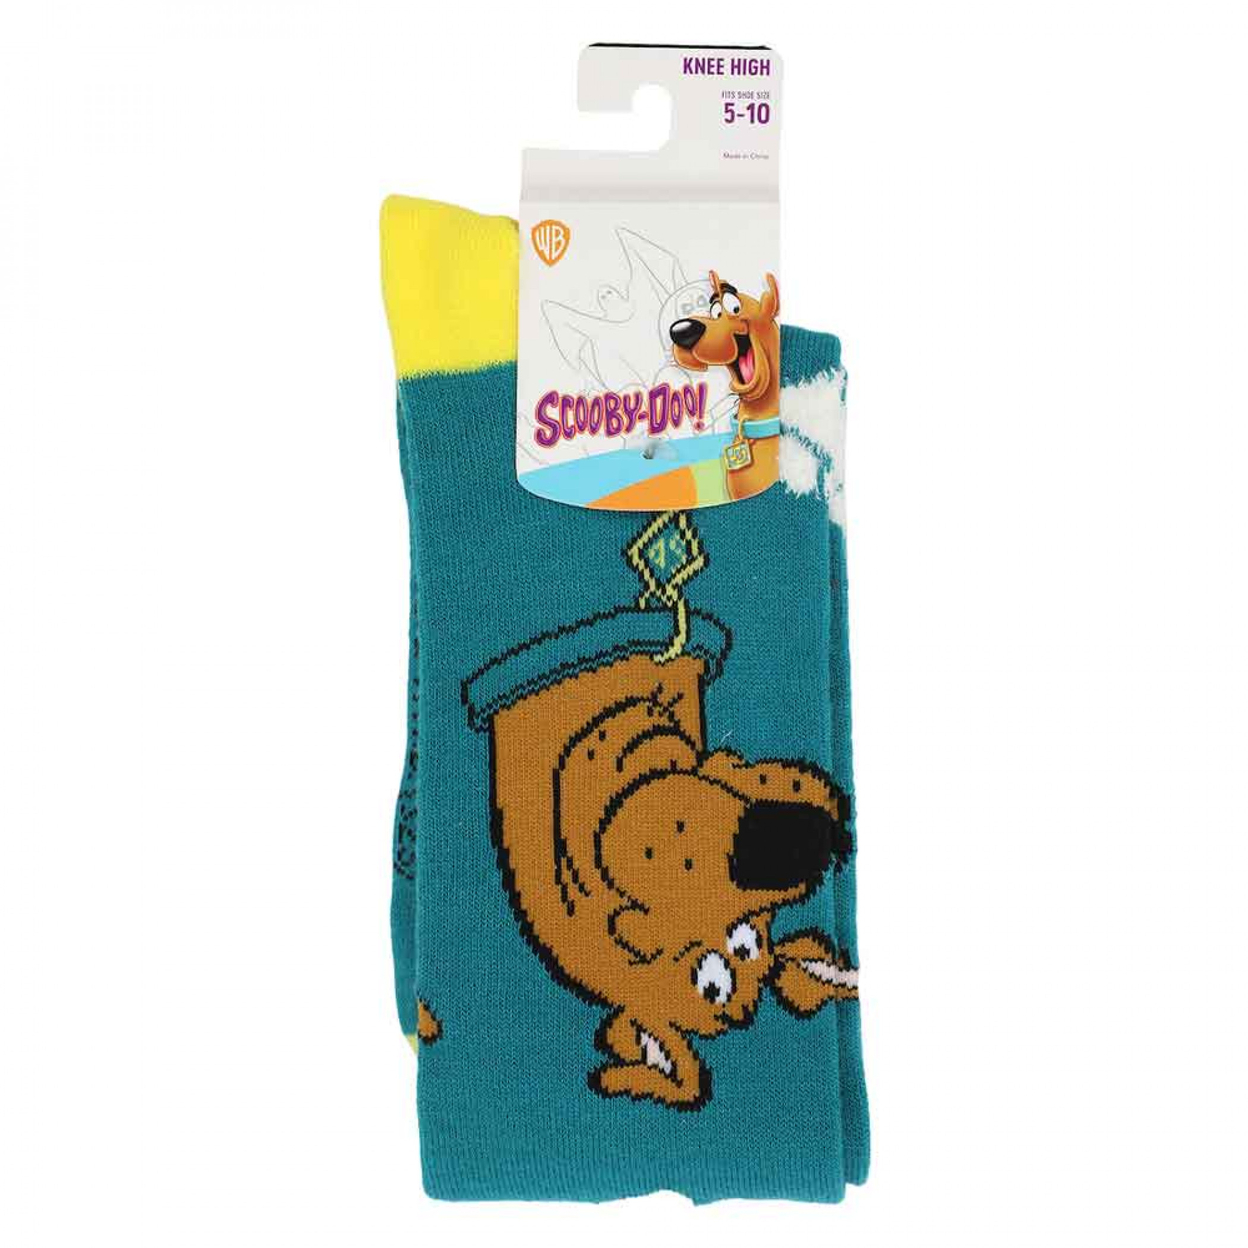 Scooby-Doo Scooby Doo Paw Prints Knee High Socks